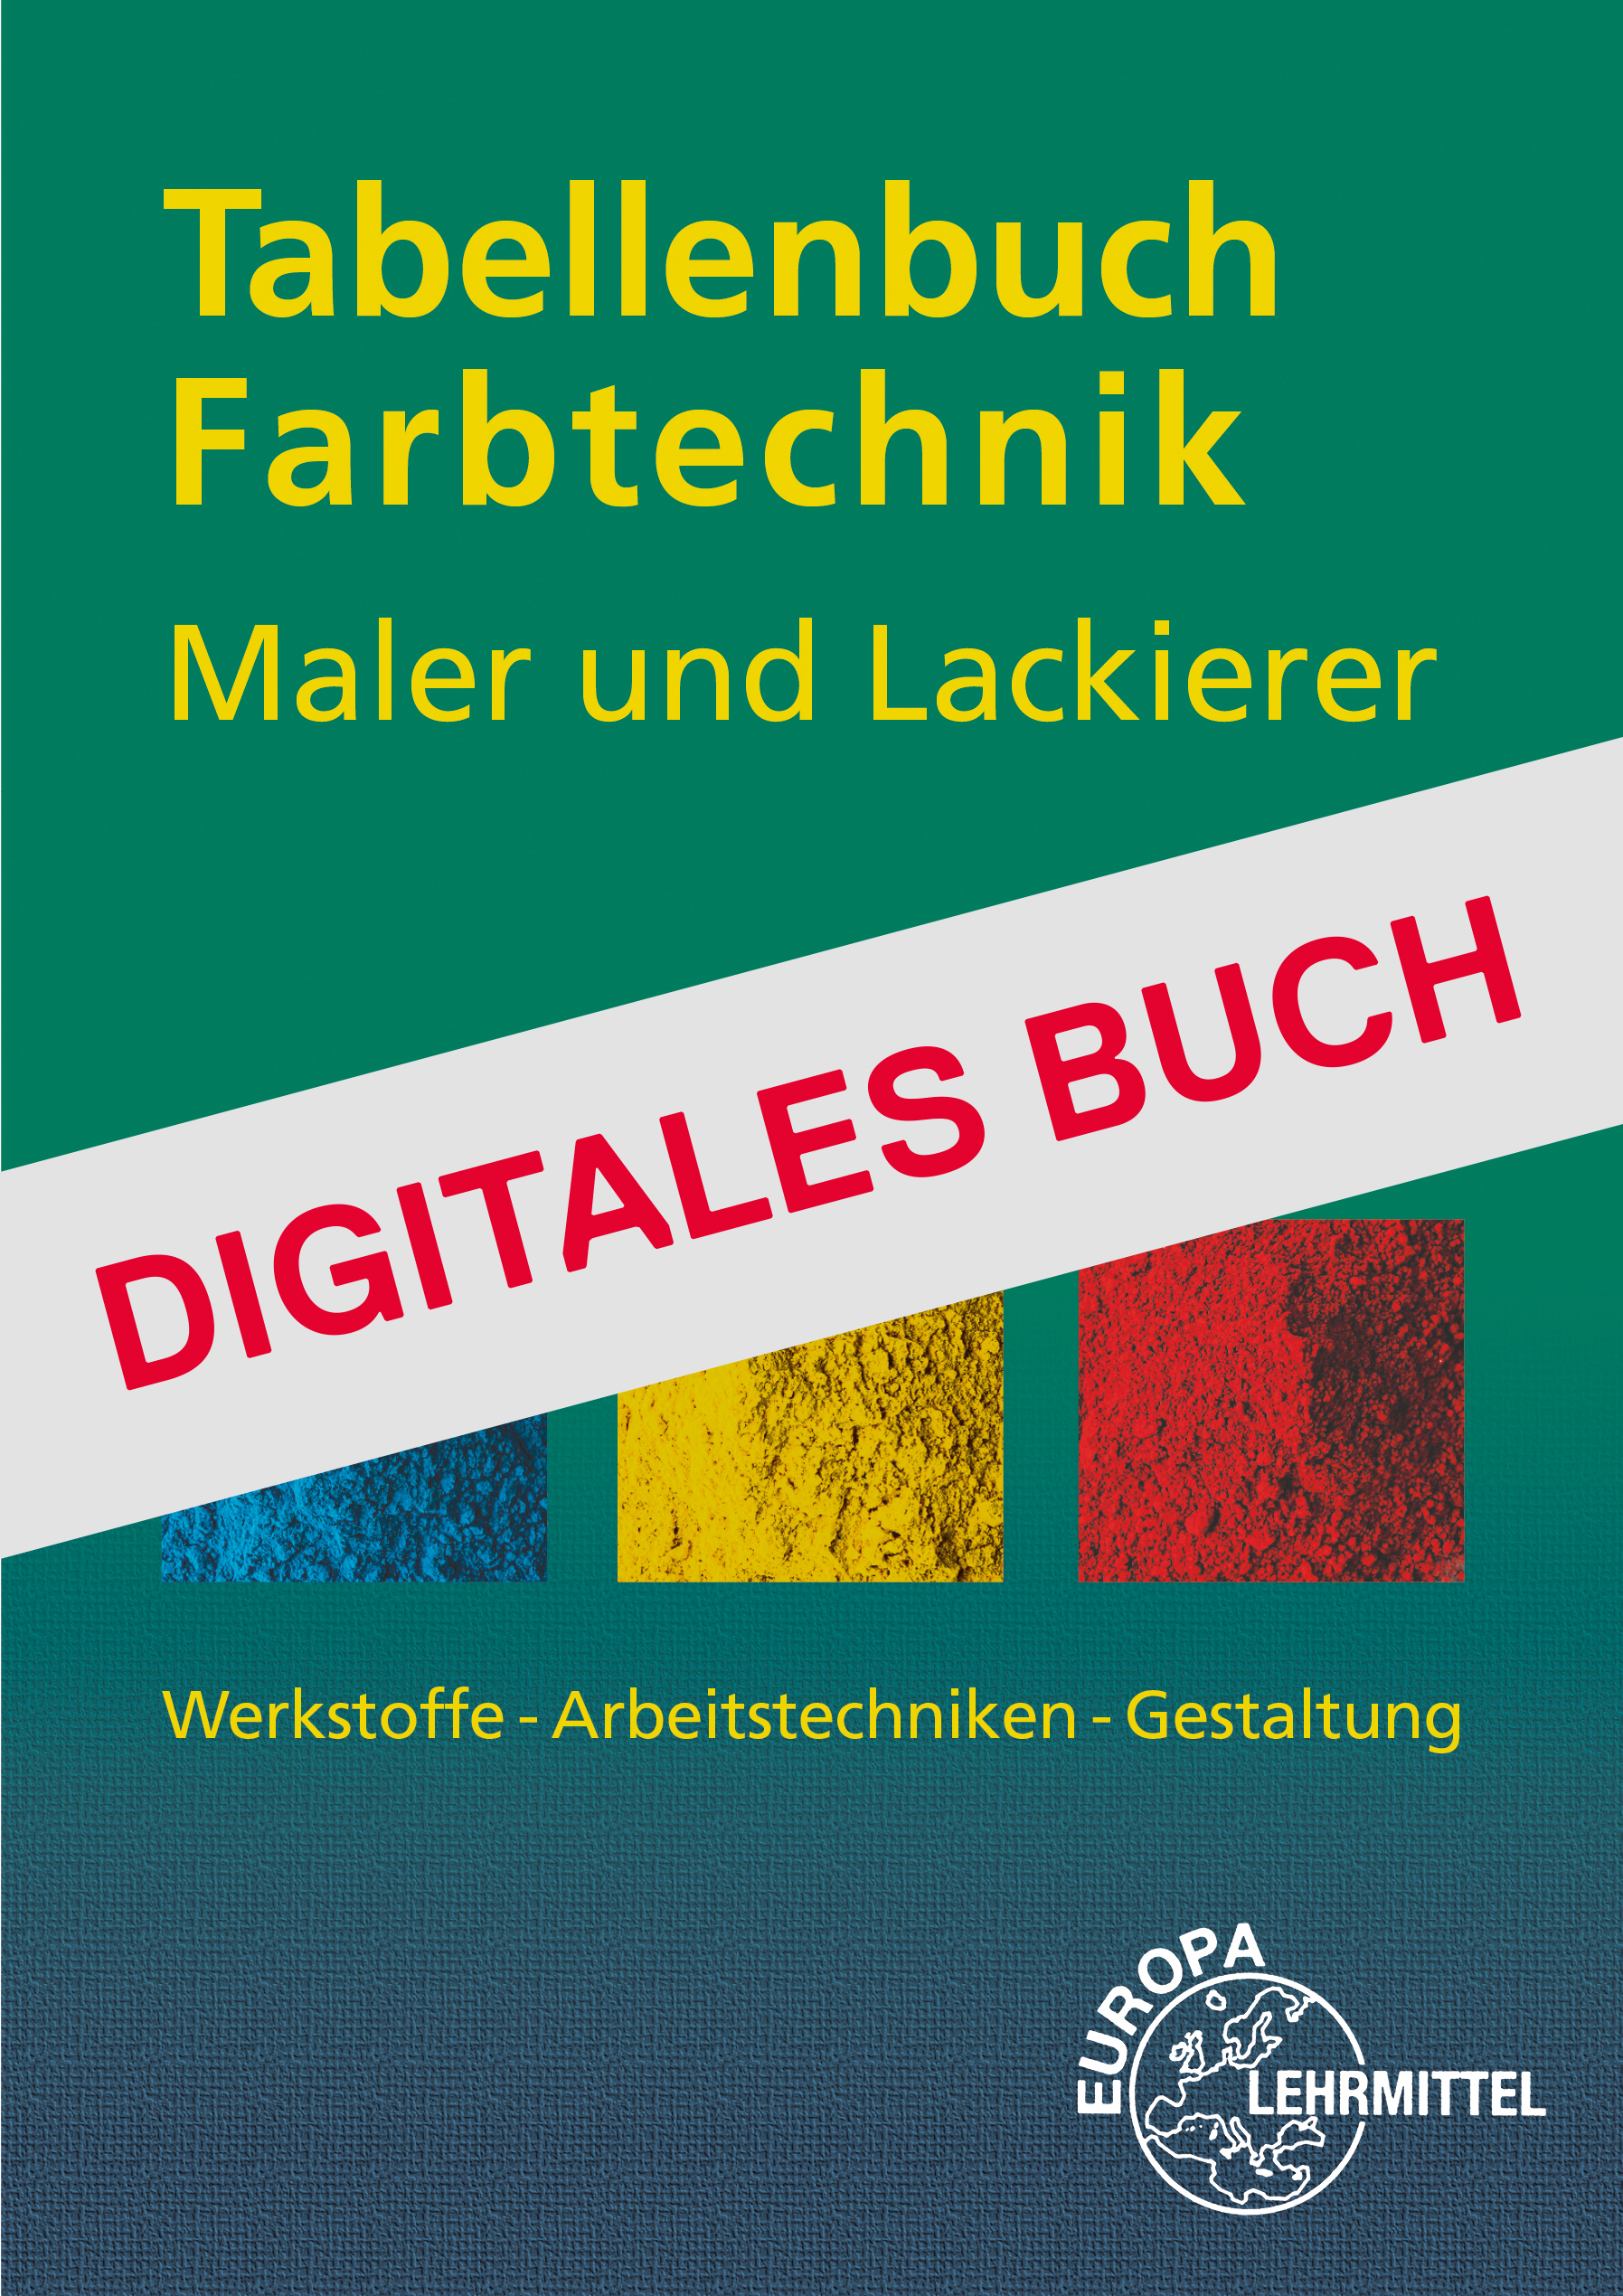 Tabellenbuch Farbtechnik Maler und Lackierer Digitales Buch